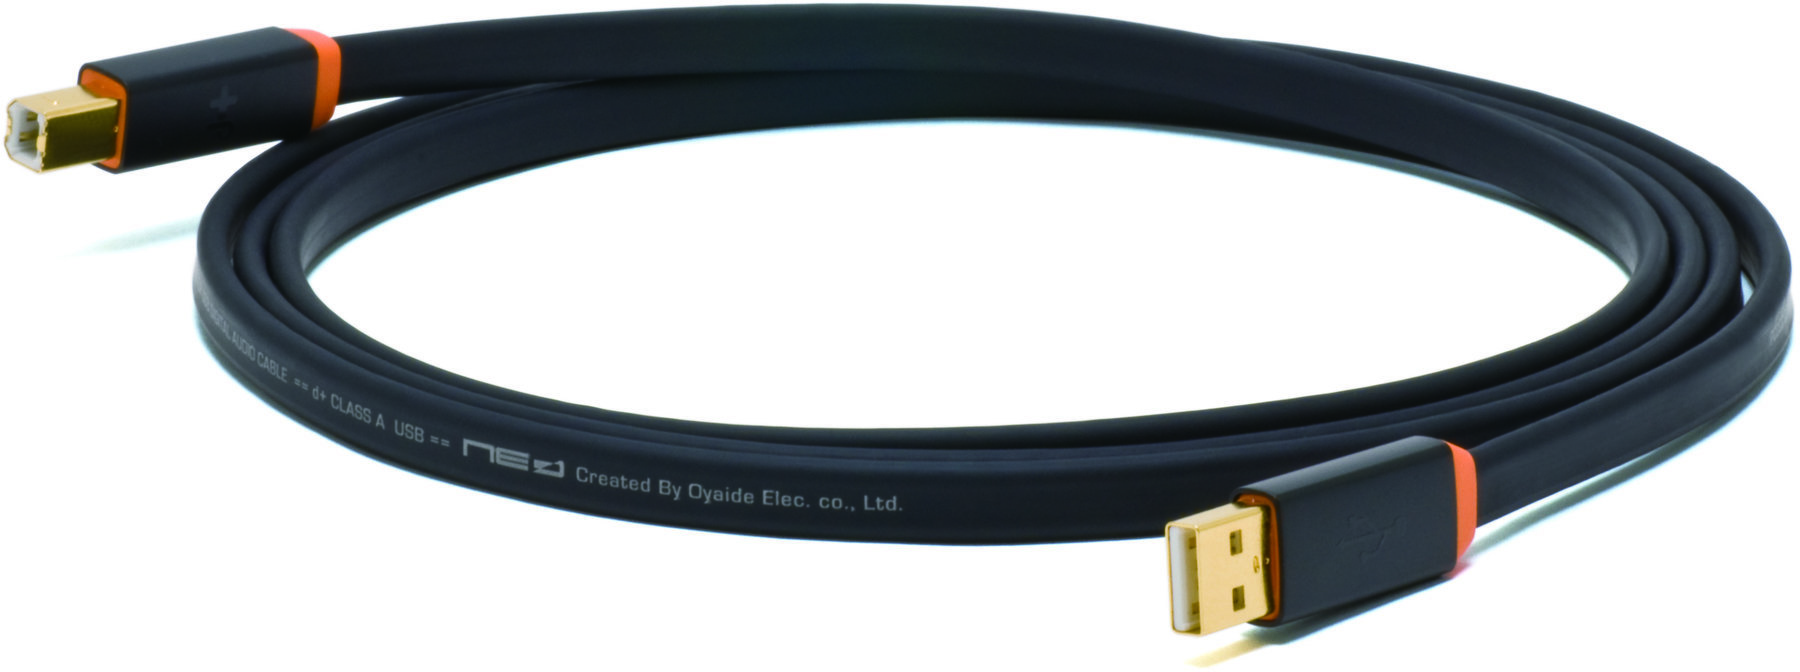 Kabel USB Oyaide NEO d+ USB 2.0 Class A 1m